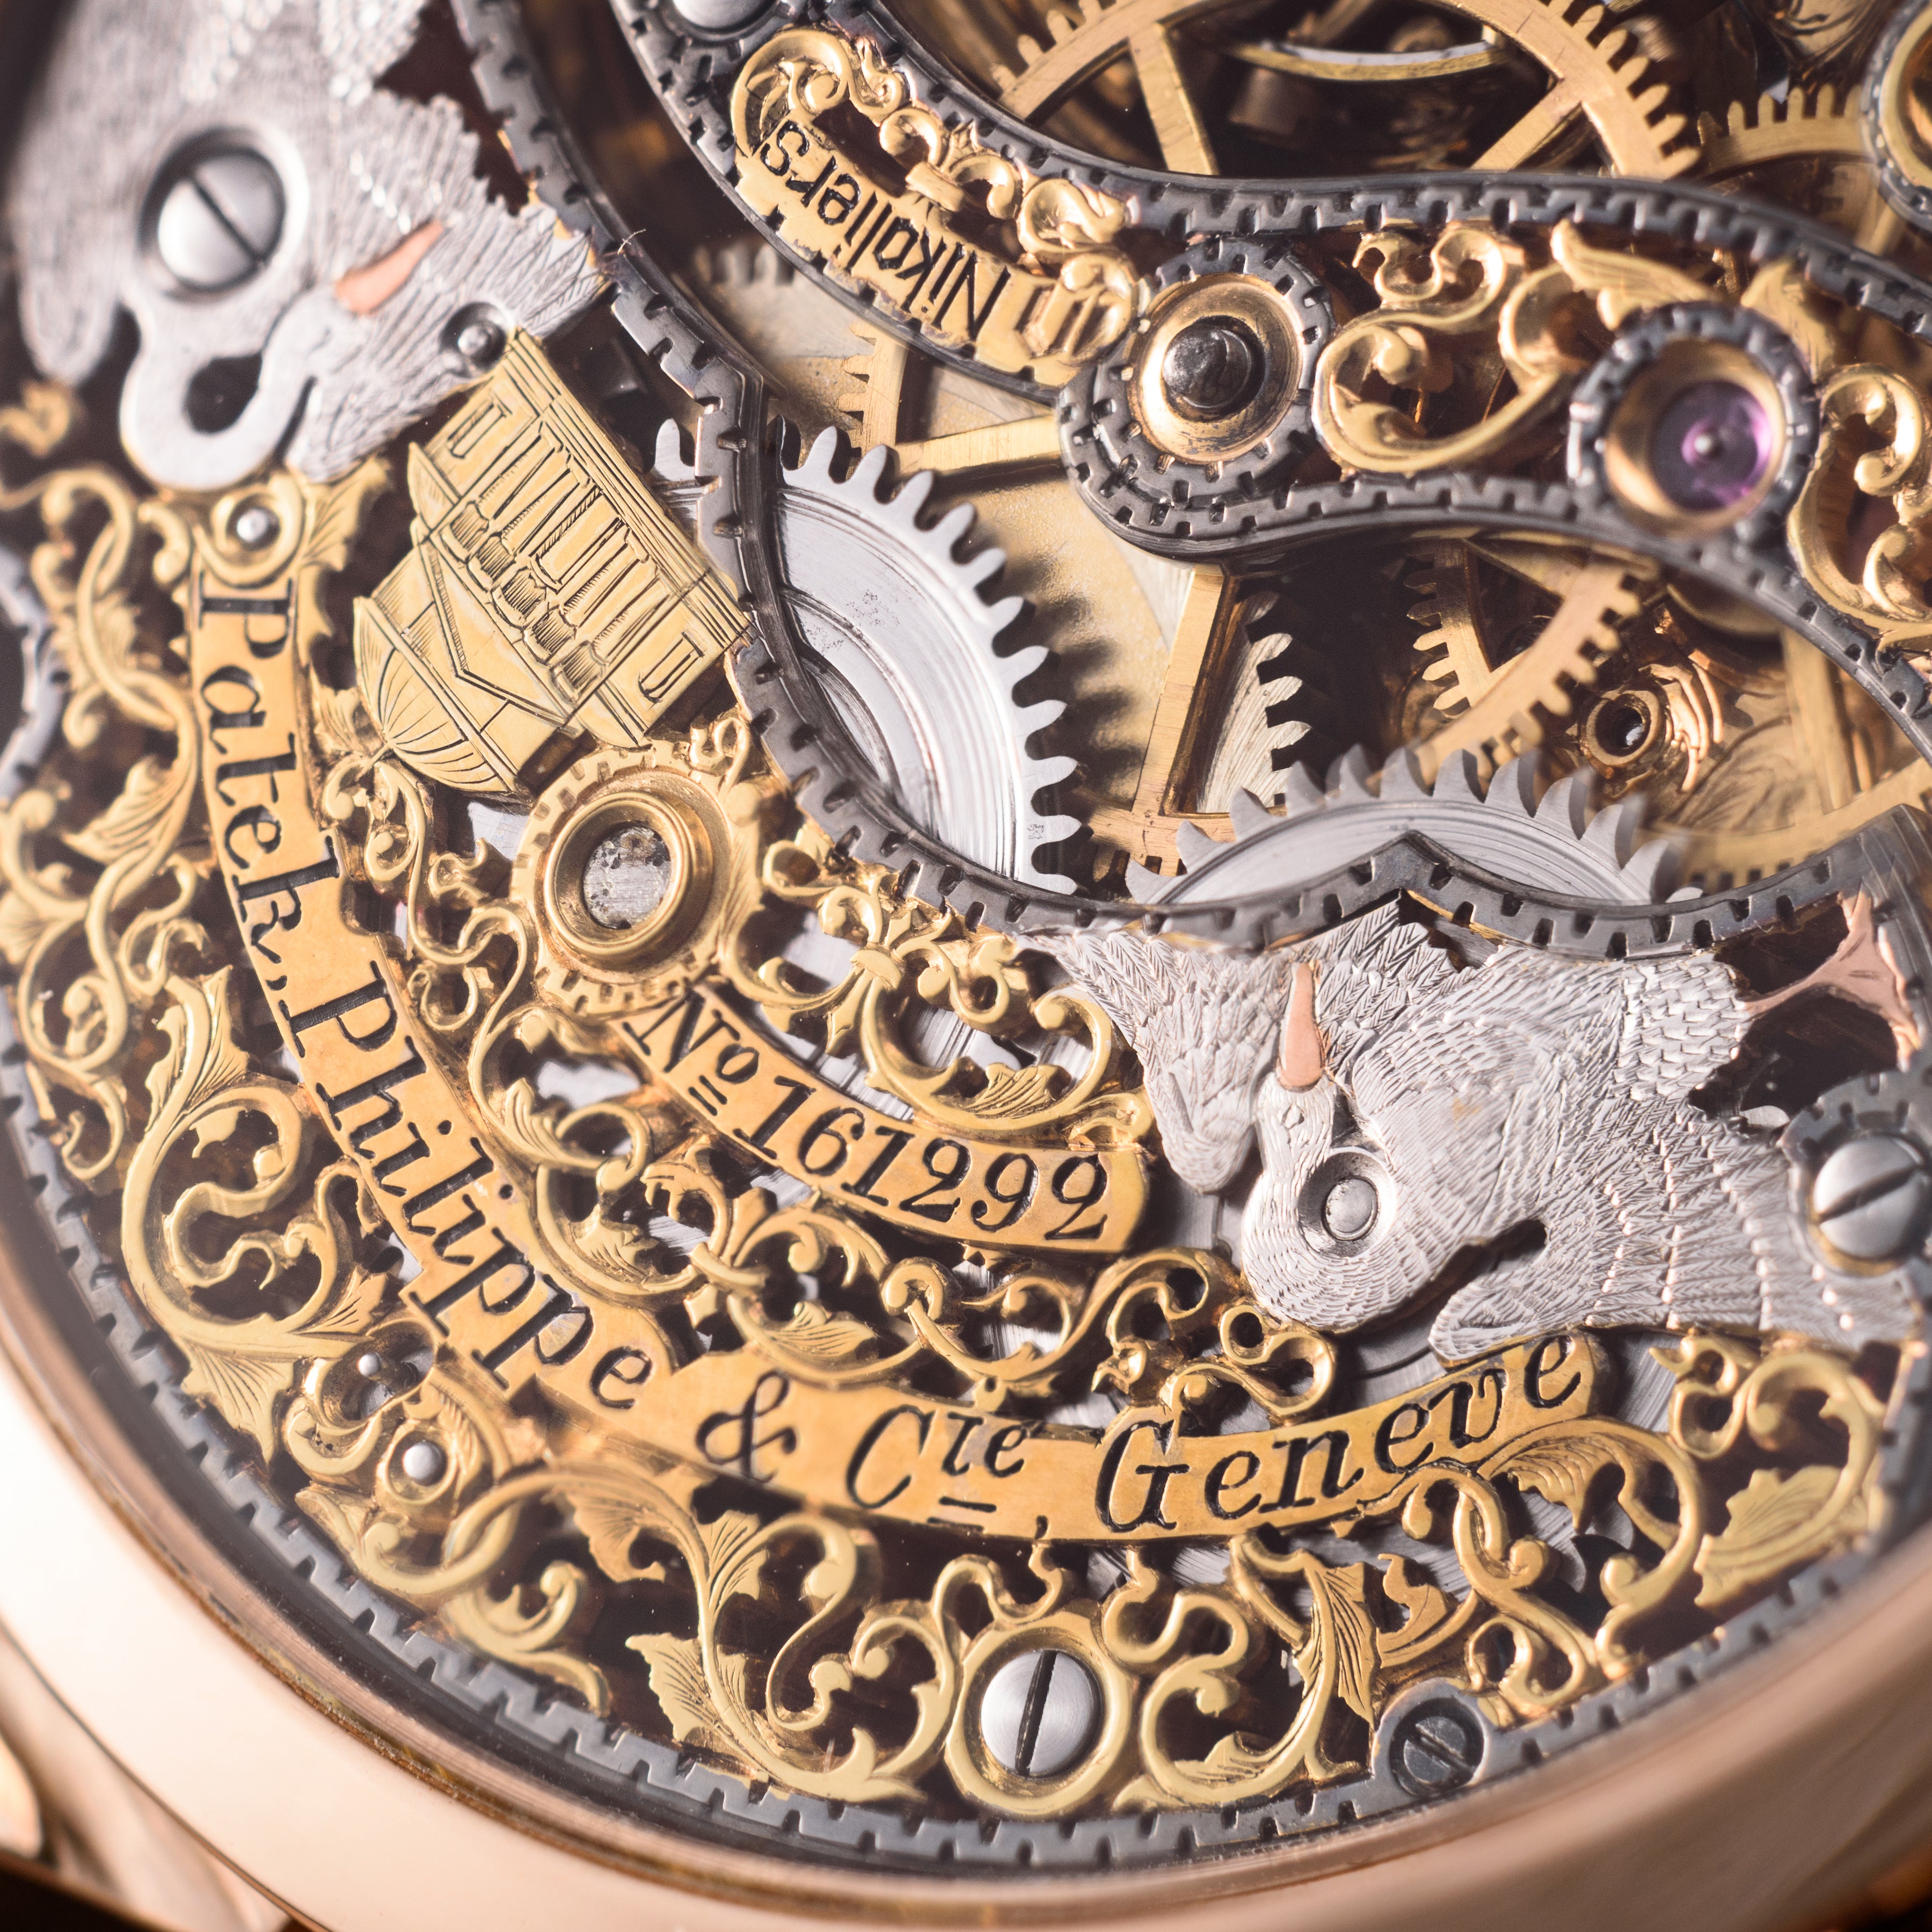 Patek Phillipe - Alive history, Swiss antique skeletonized wristwatch